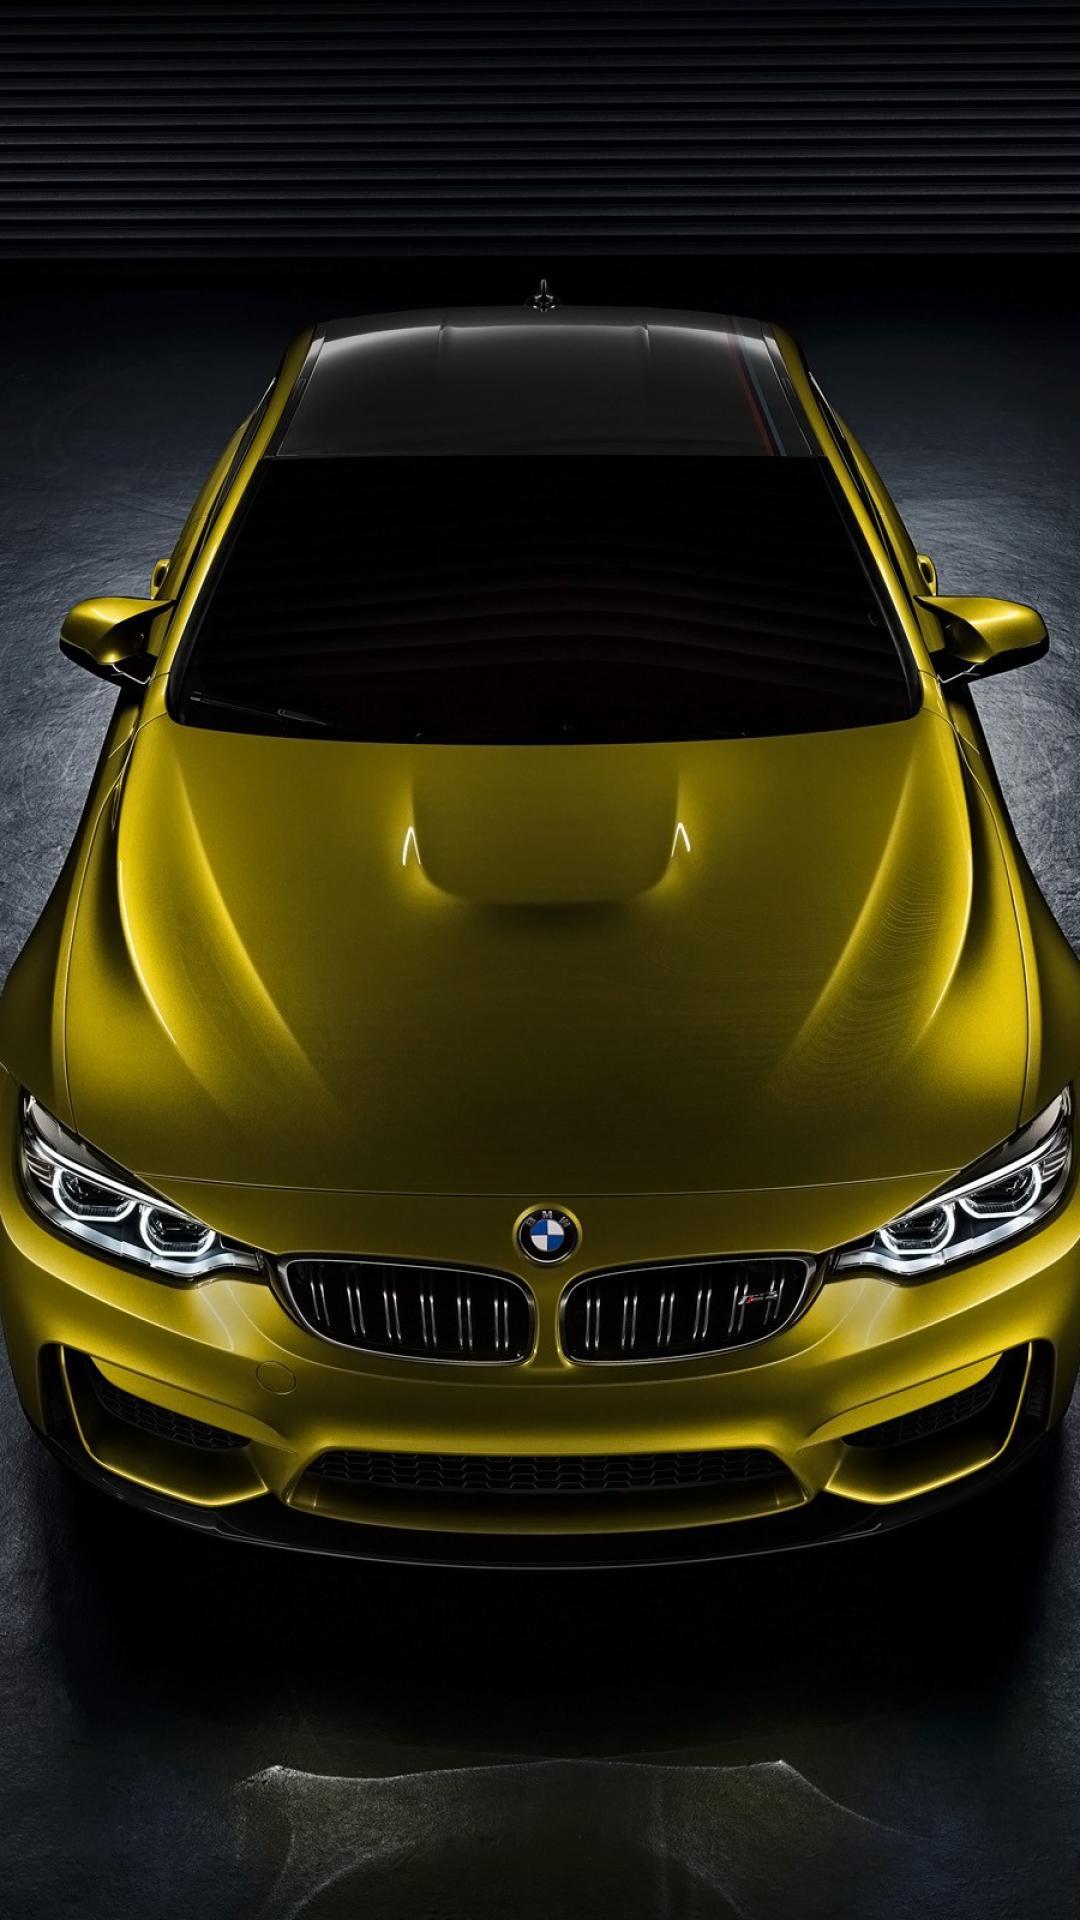 BMW Phone Wallpaper. iPhone